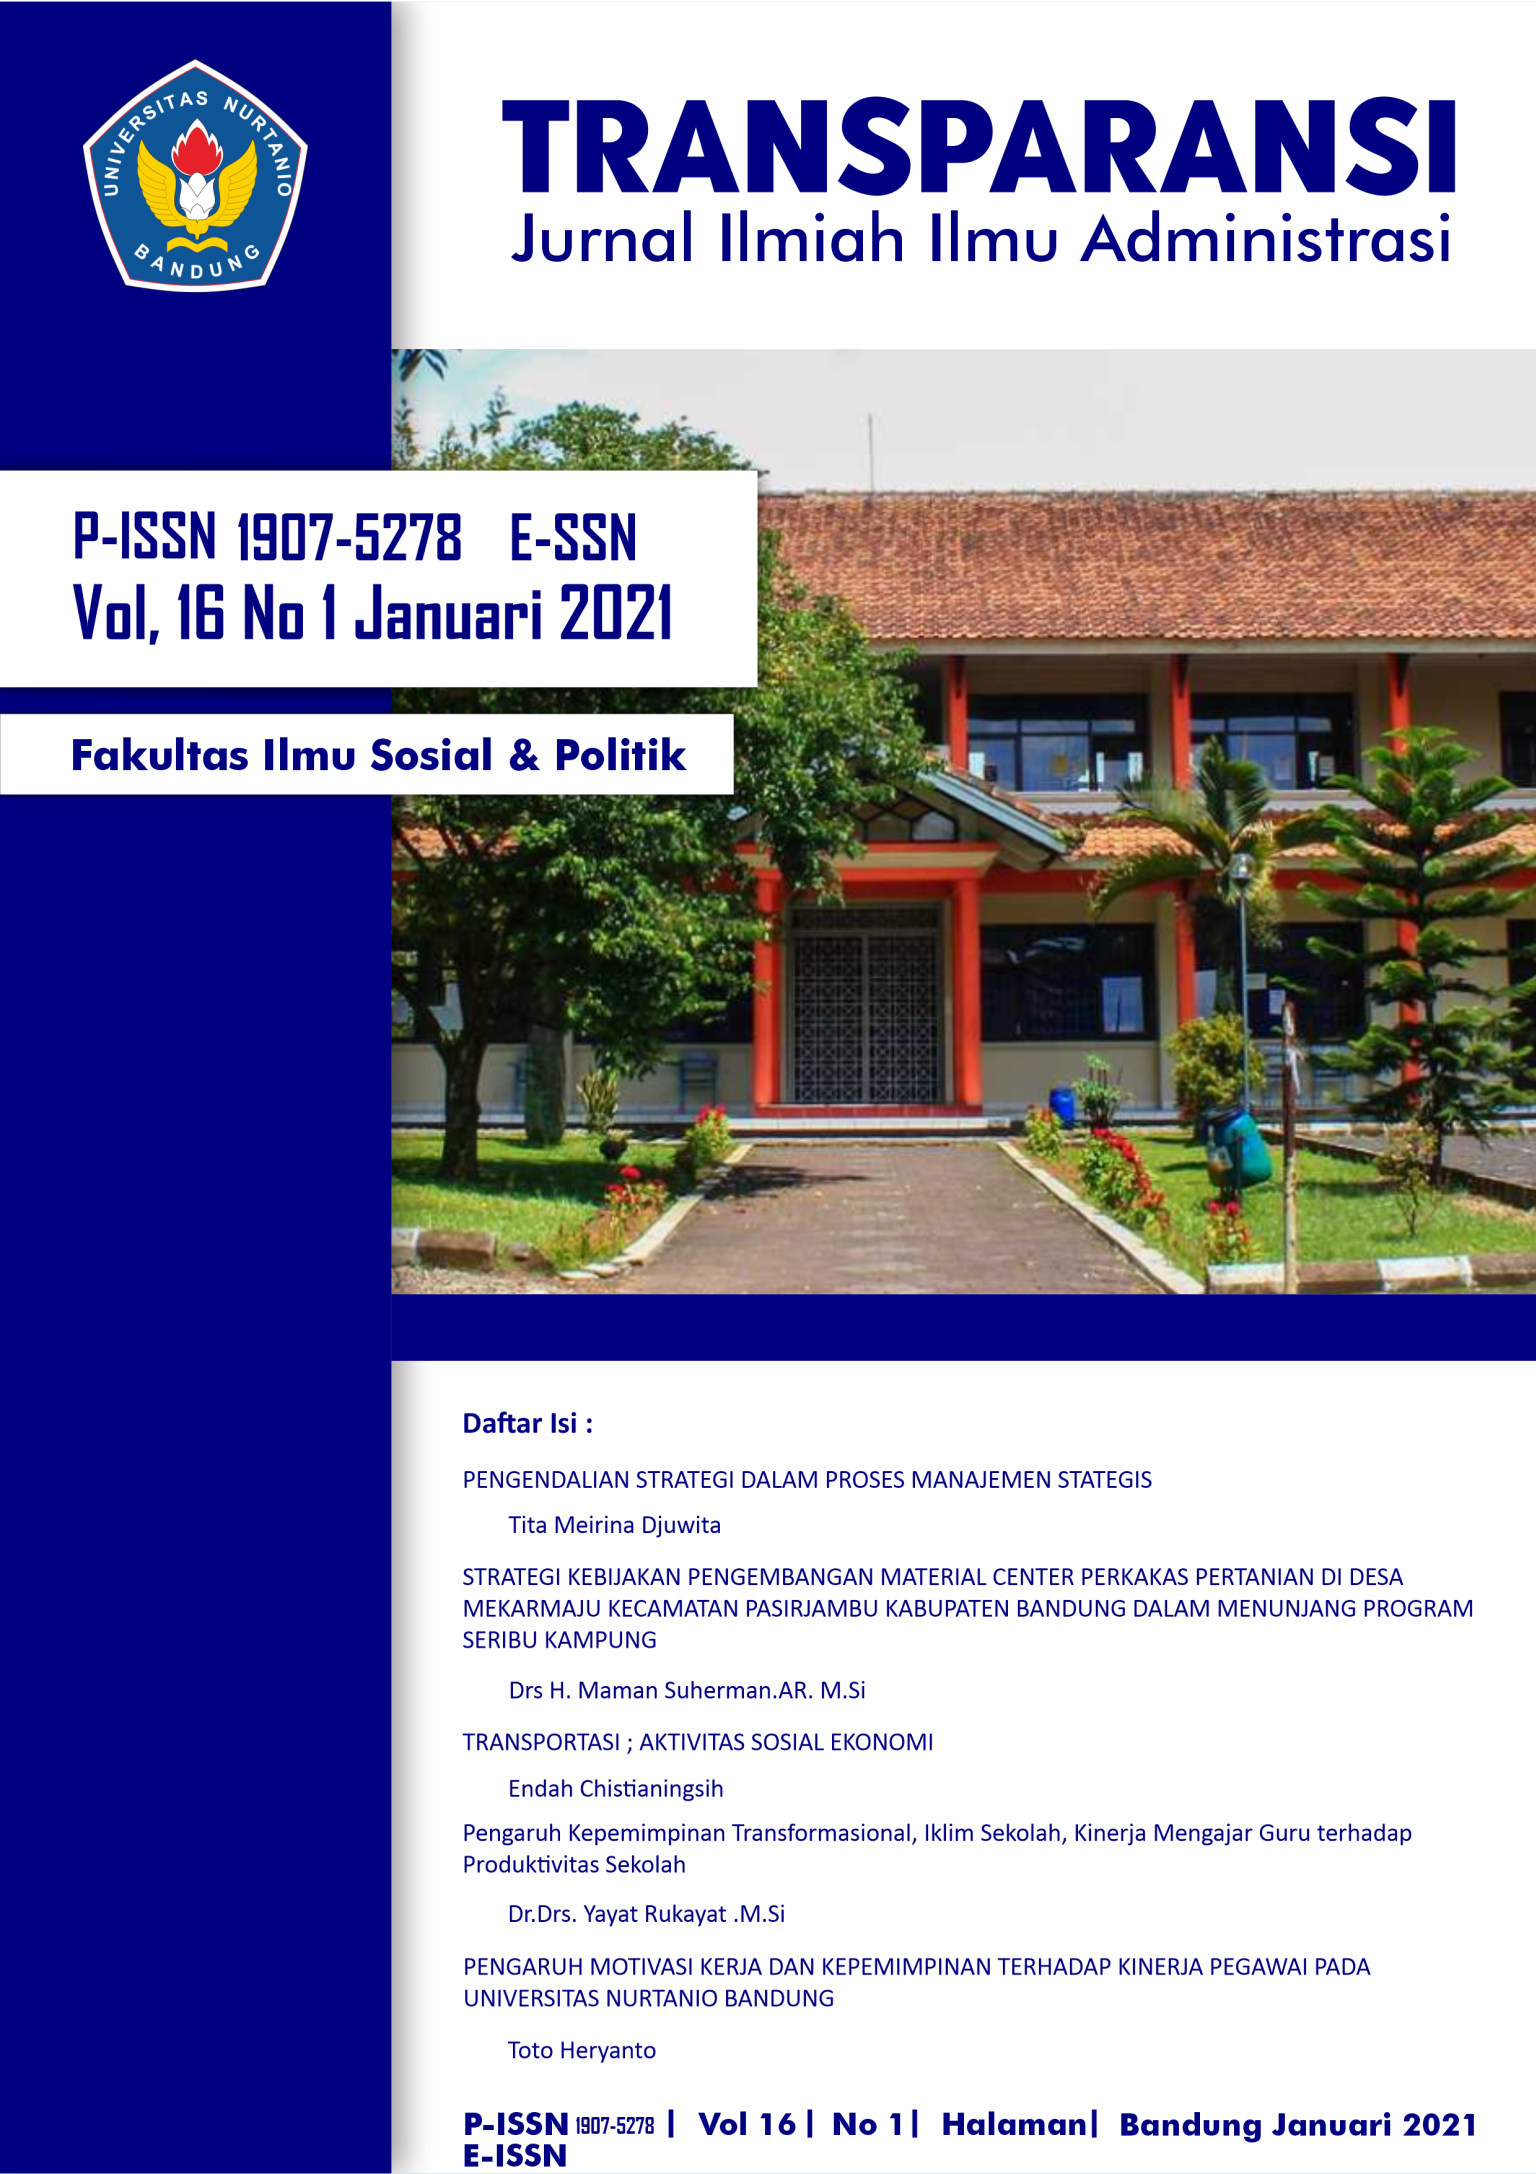 					Lihat Vol 16 No 1 (2021): TRANSPARANSI Jurnal Ilmu Administrasi
				